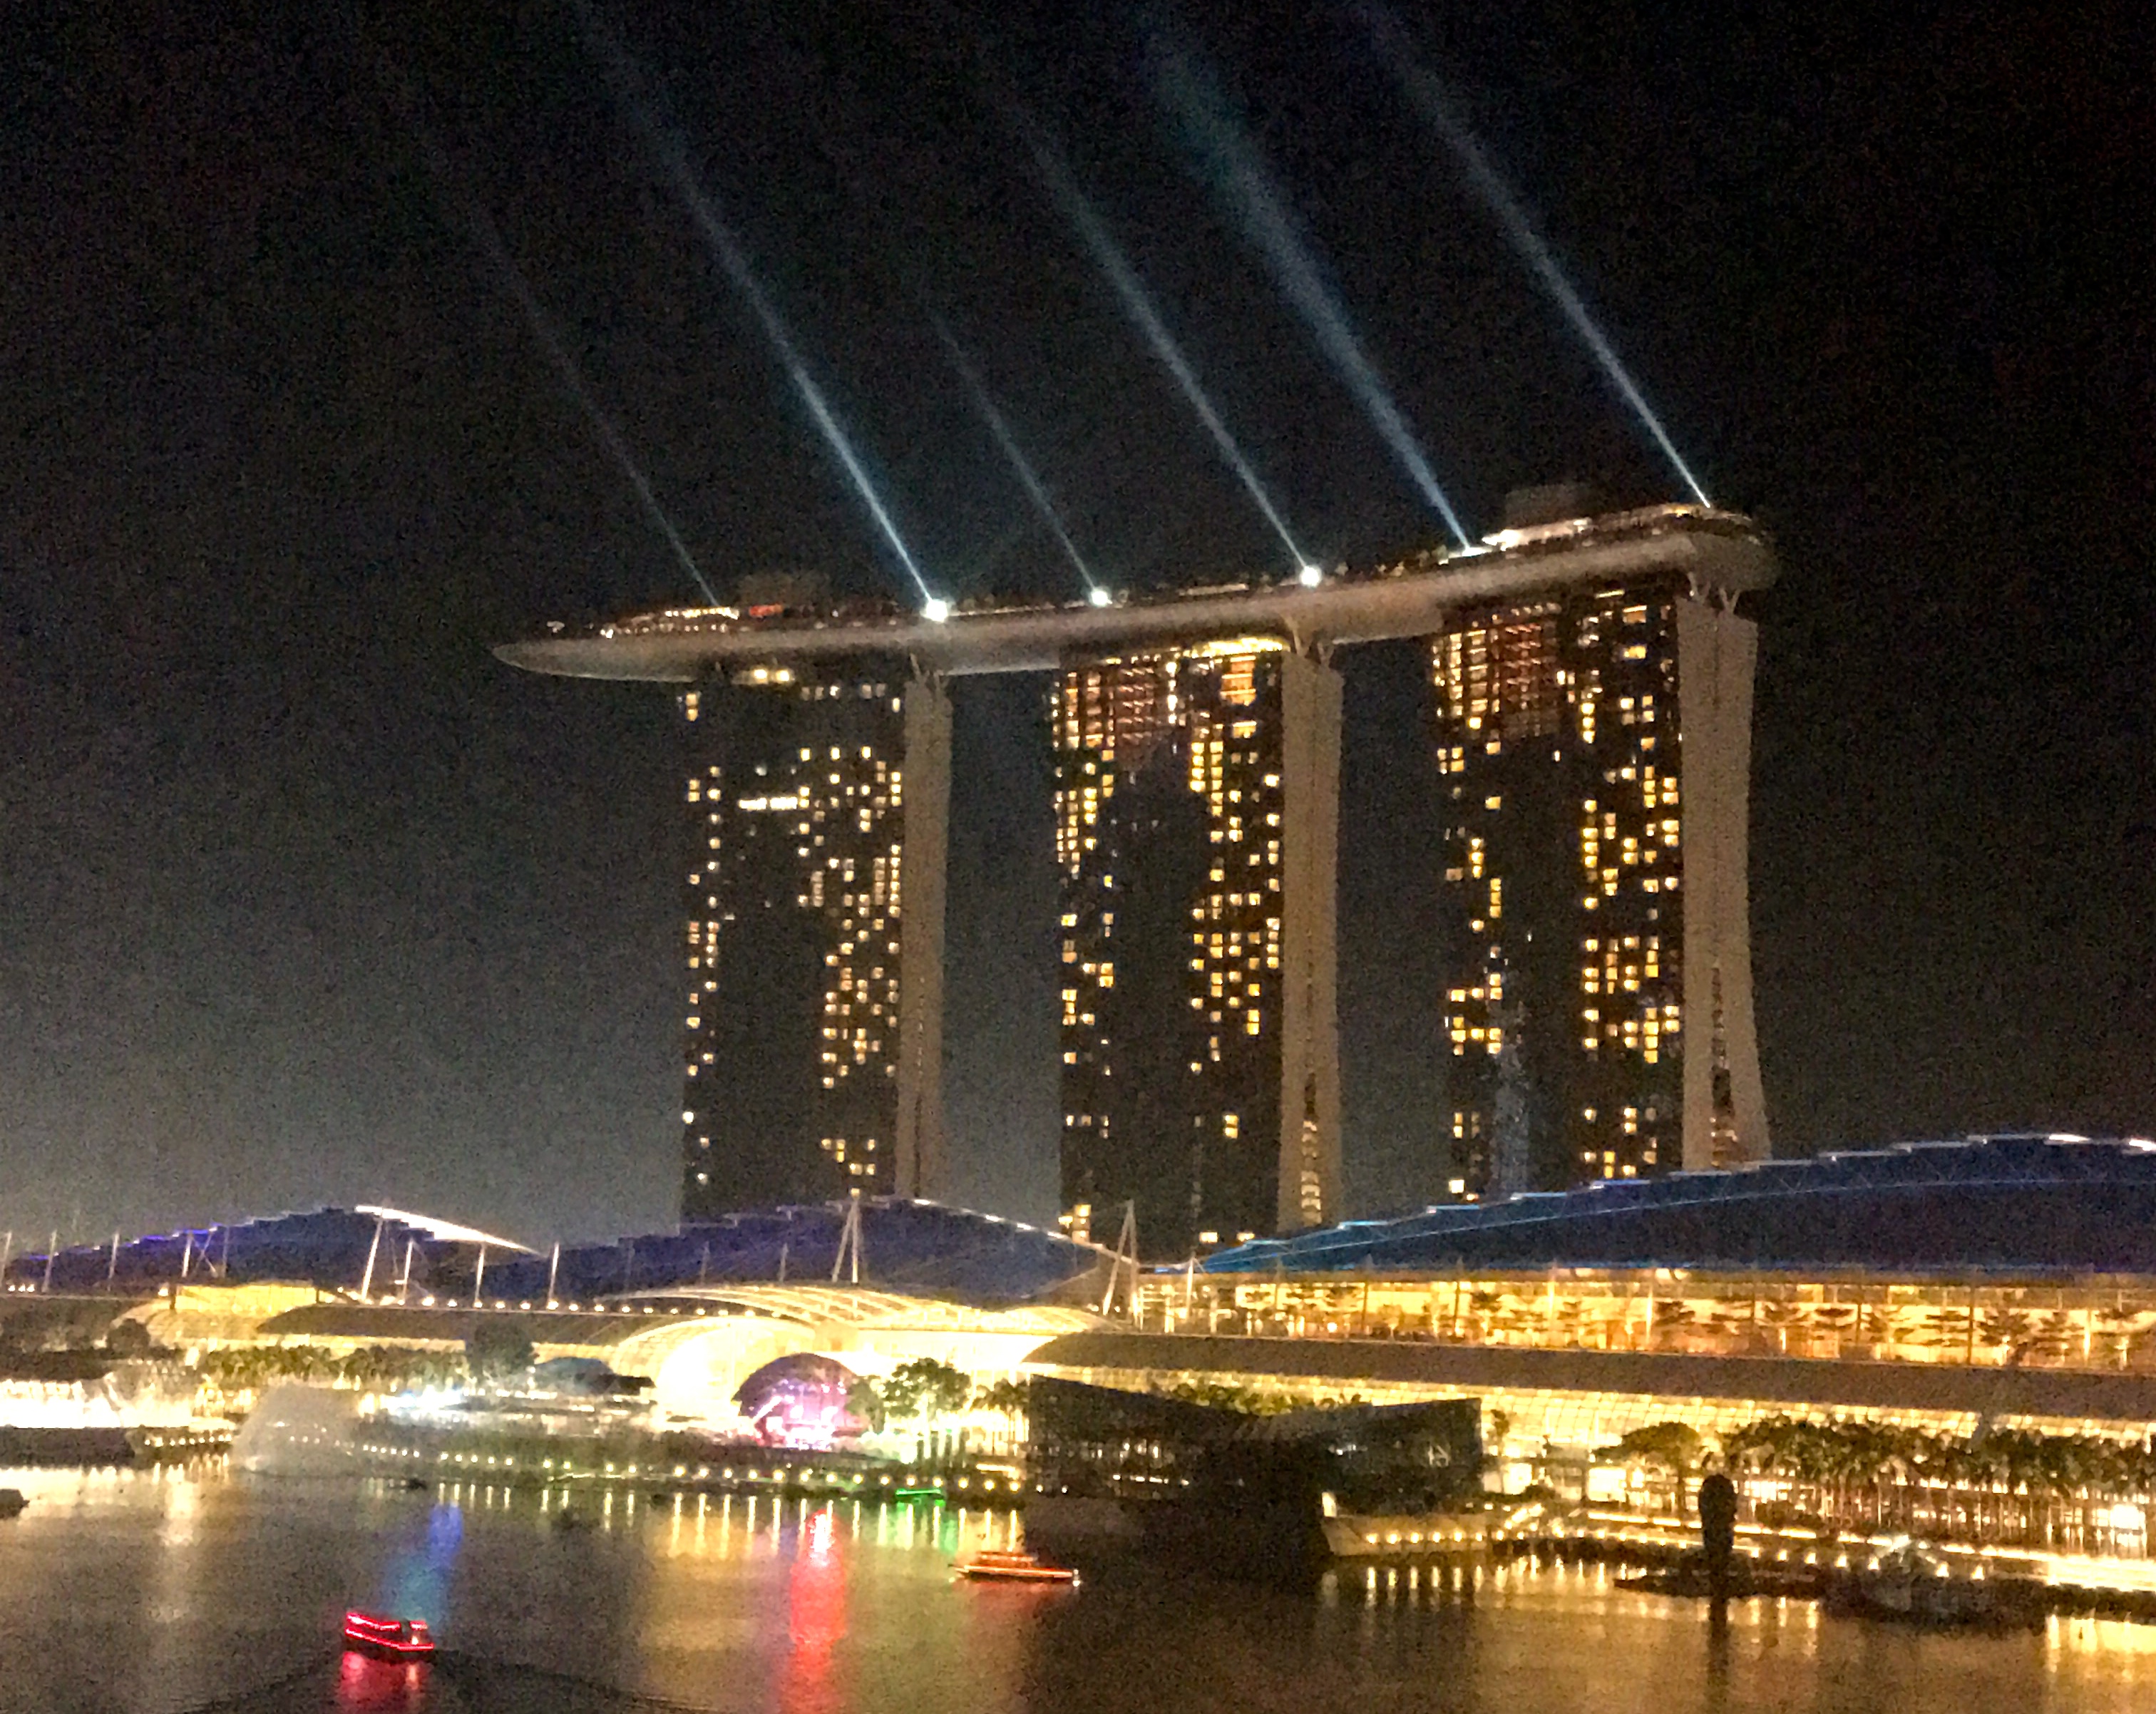 Night light show from the Boat, Marina Bay Sands, Singapore. www.gypstyat60.com